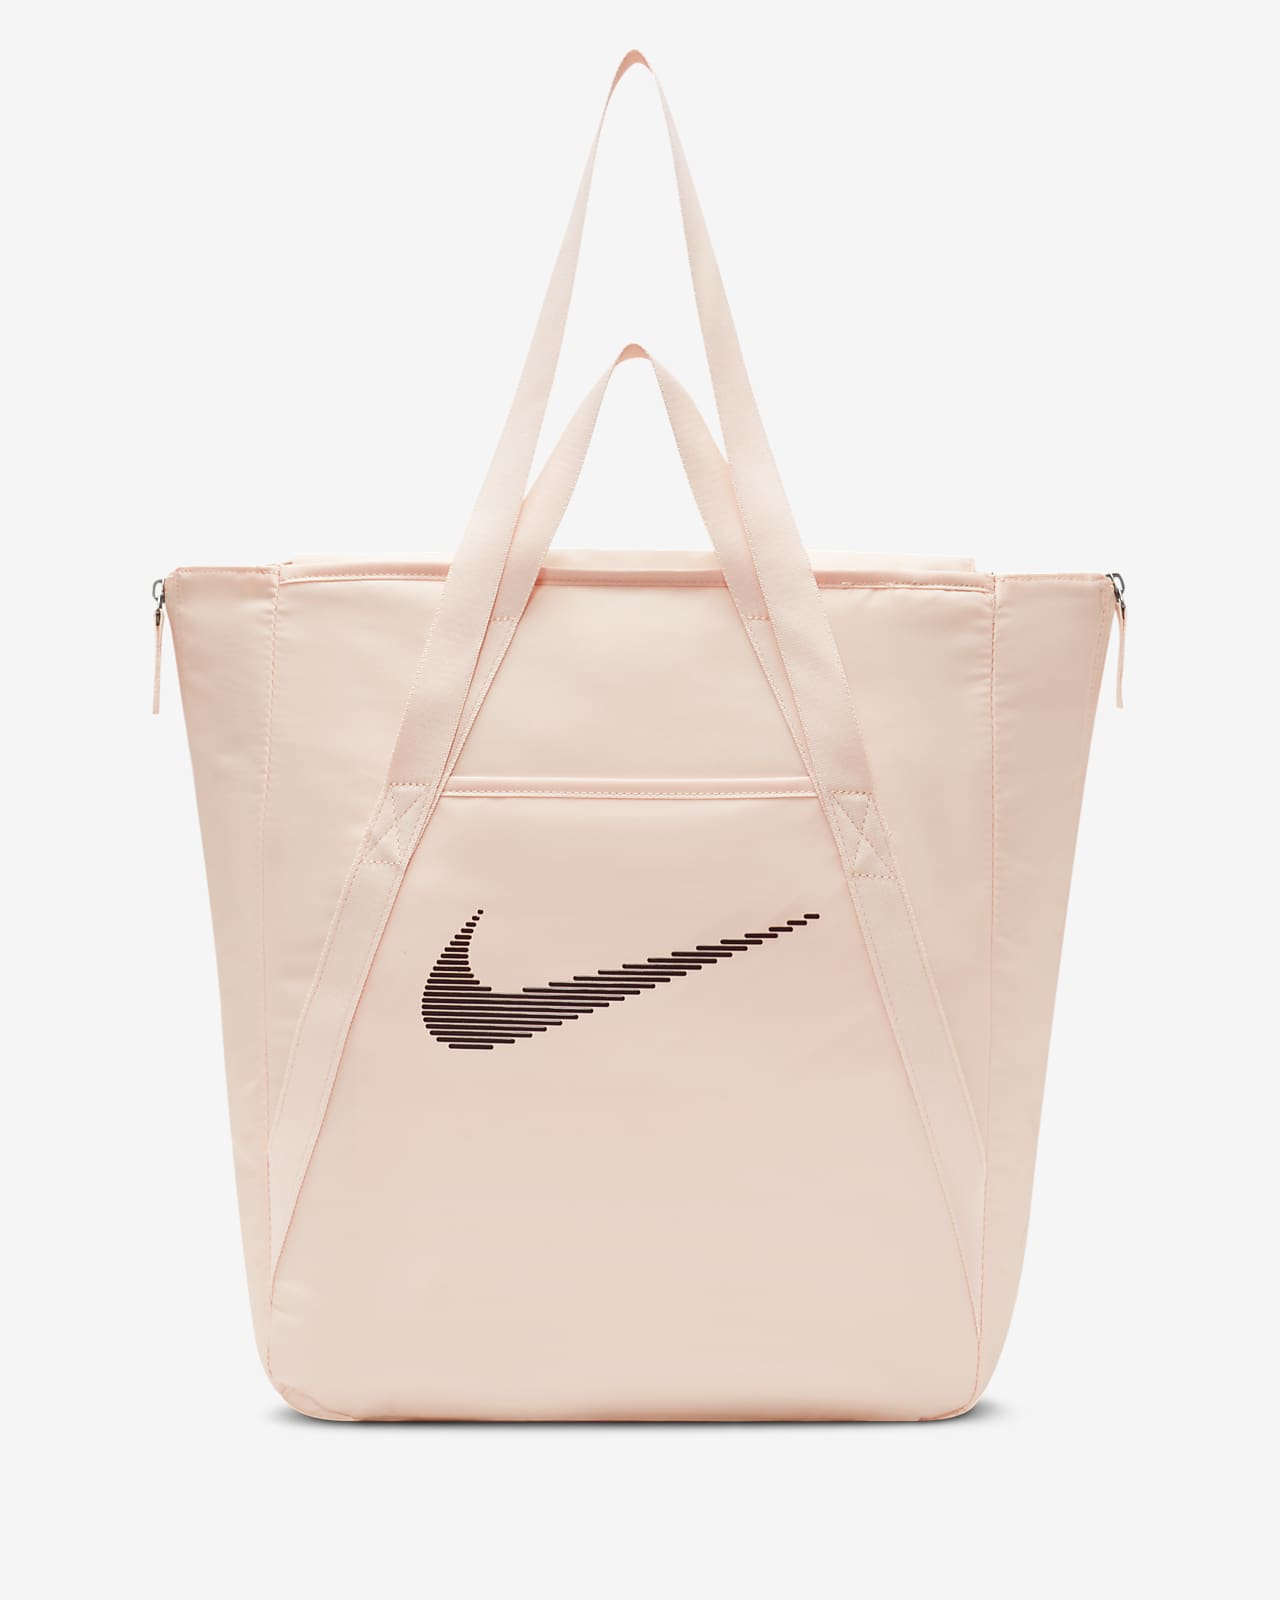 Nike Gym Training Tote Bag, Black/White : : Sports & Outdoors